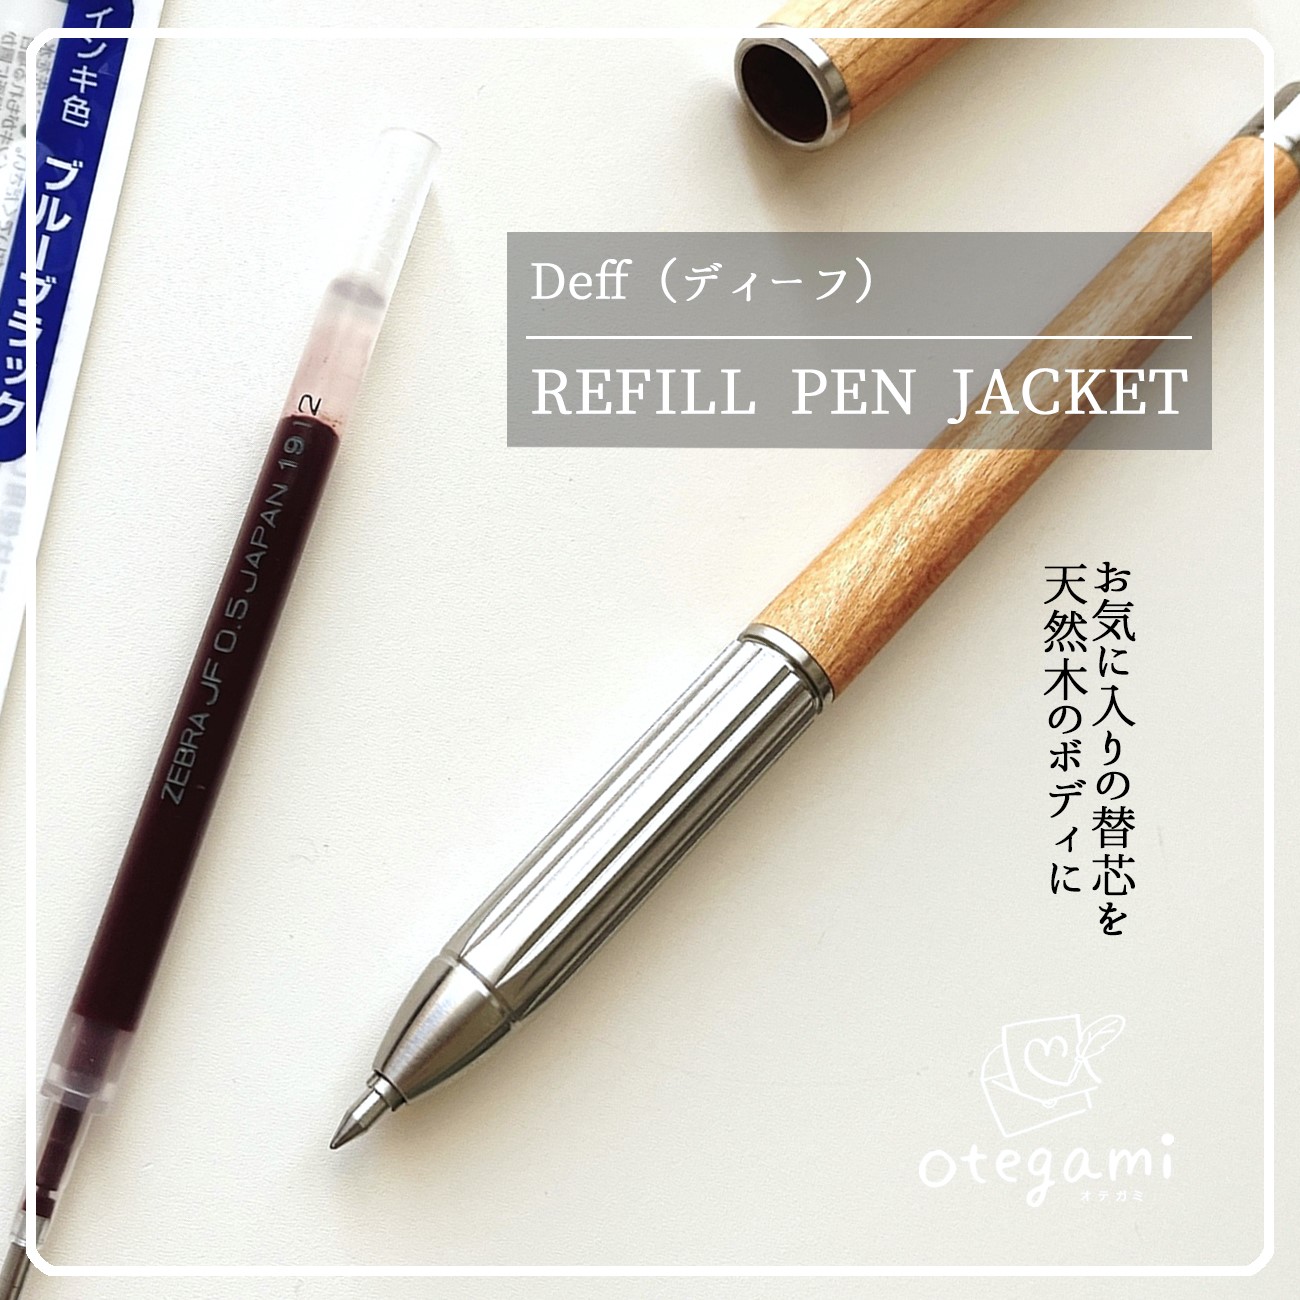 REFILL PEN JACKET」で好みの替芯を上質な木軸ペンに［Sponsored